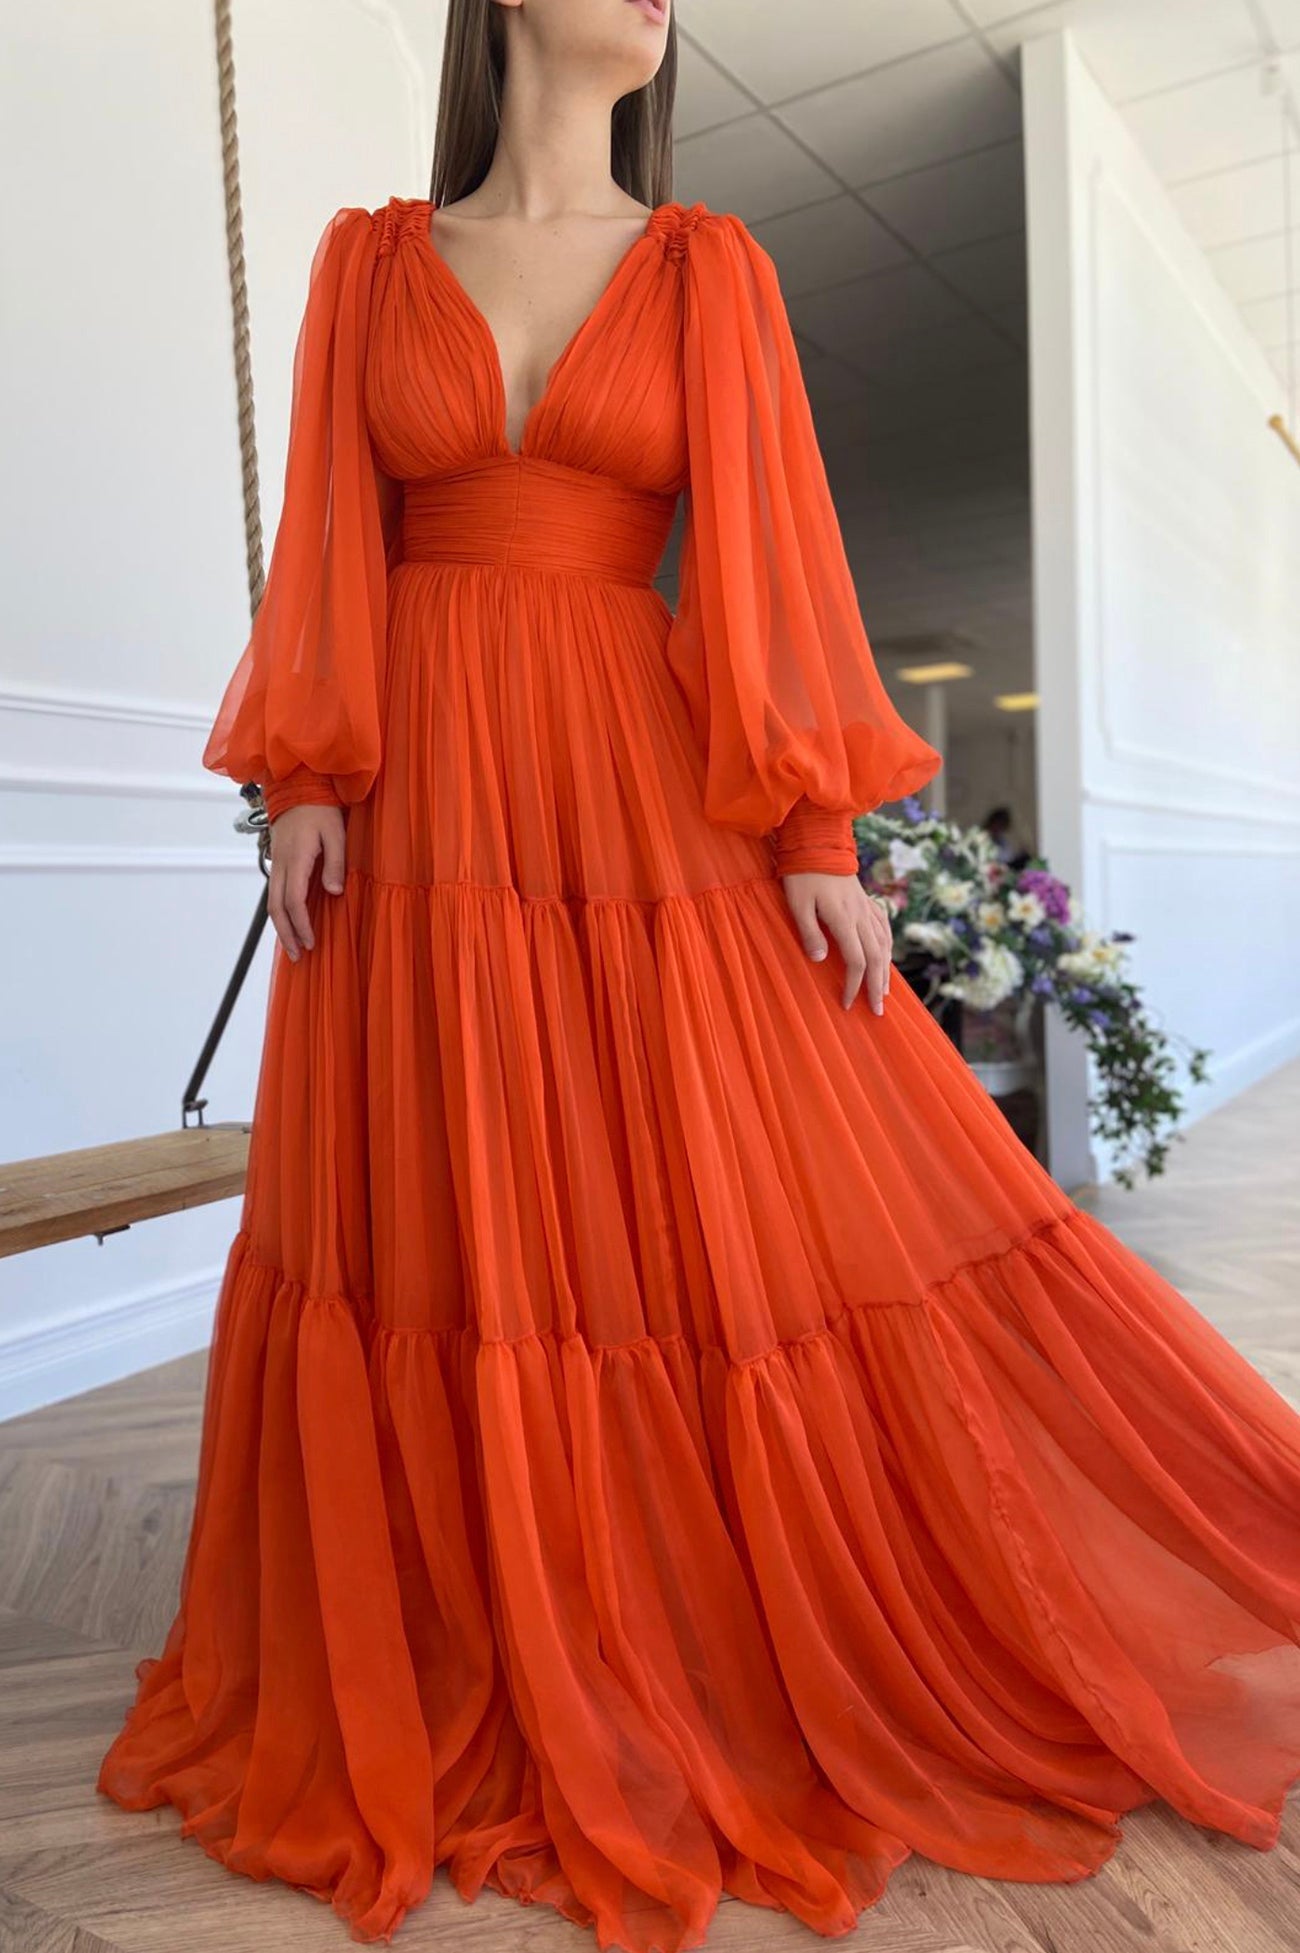 Iyla | Orange Chiffon Floor Length Prom Dress, Long Sleeve Evening Party Dress